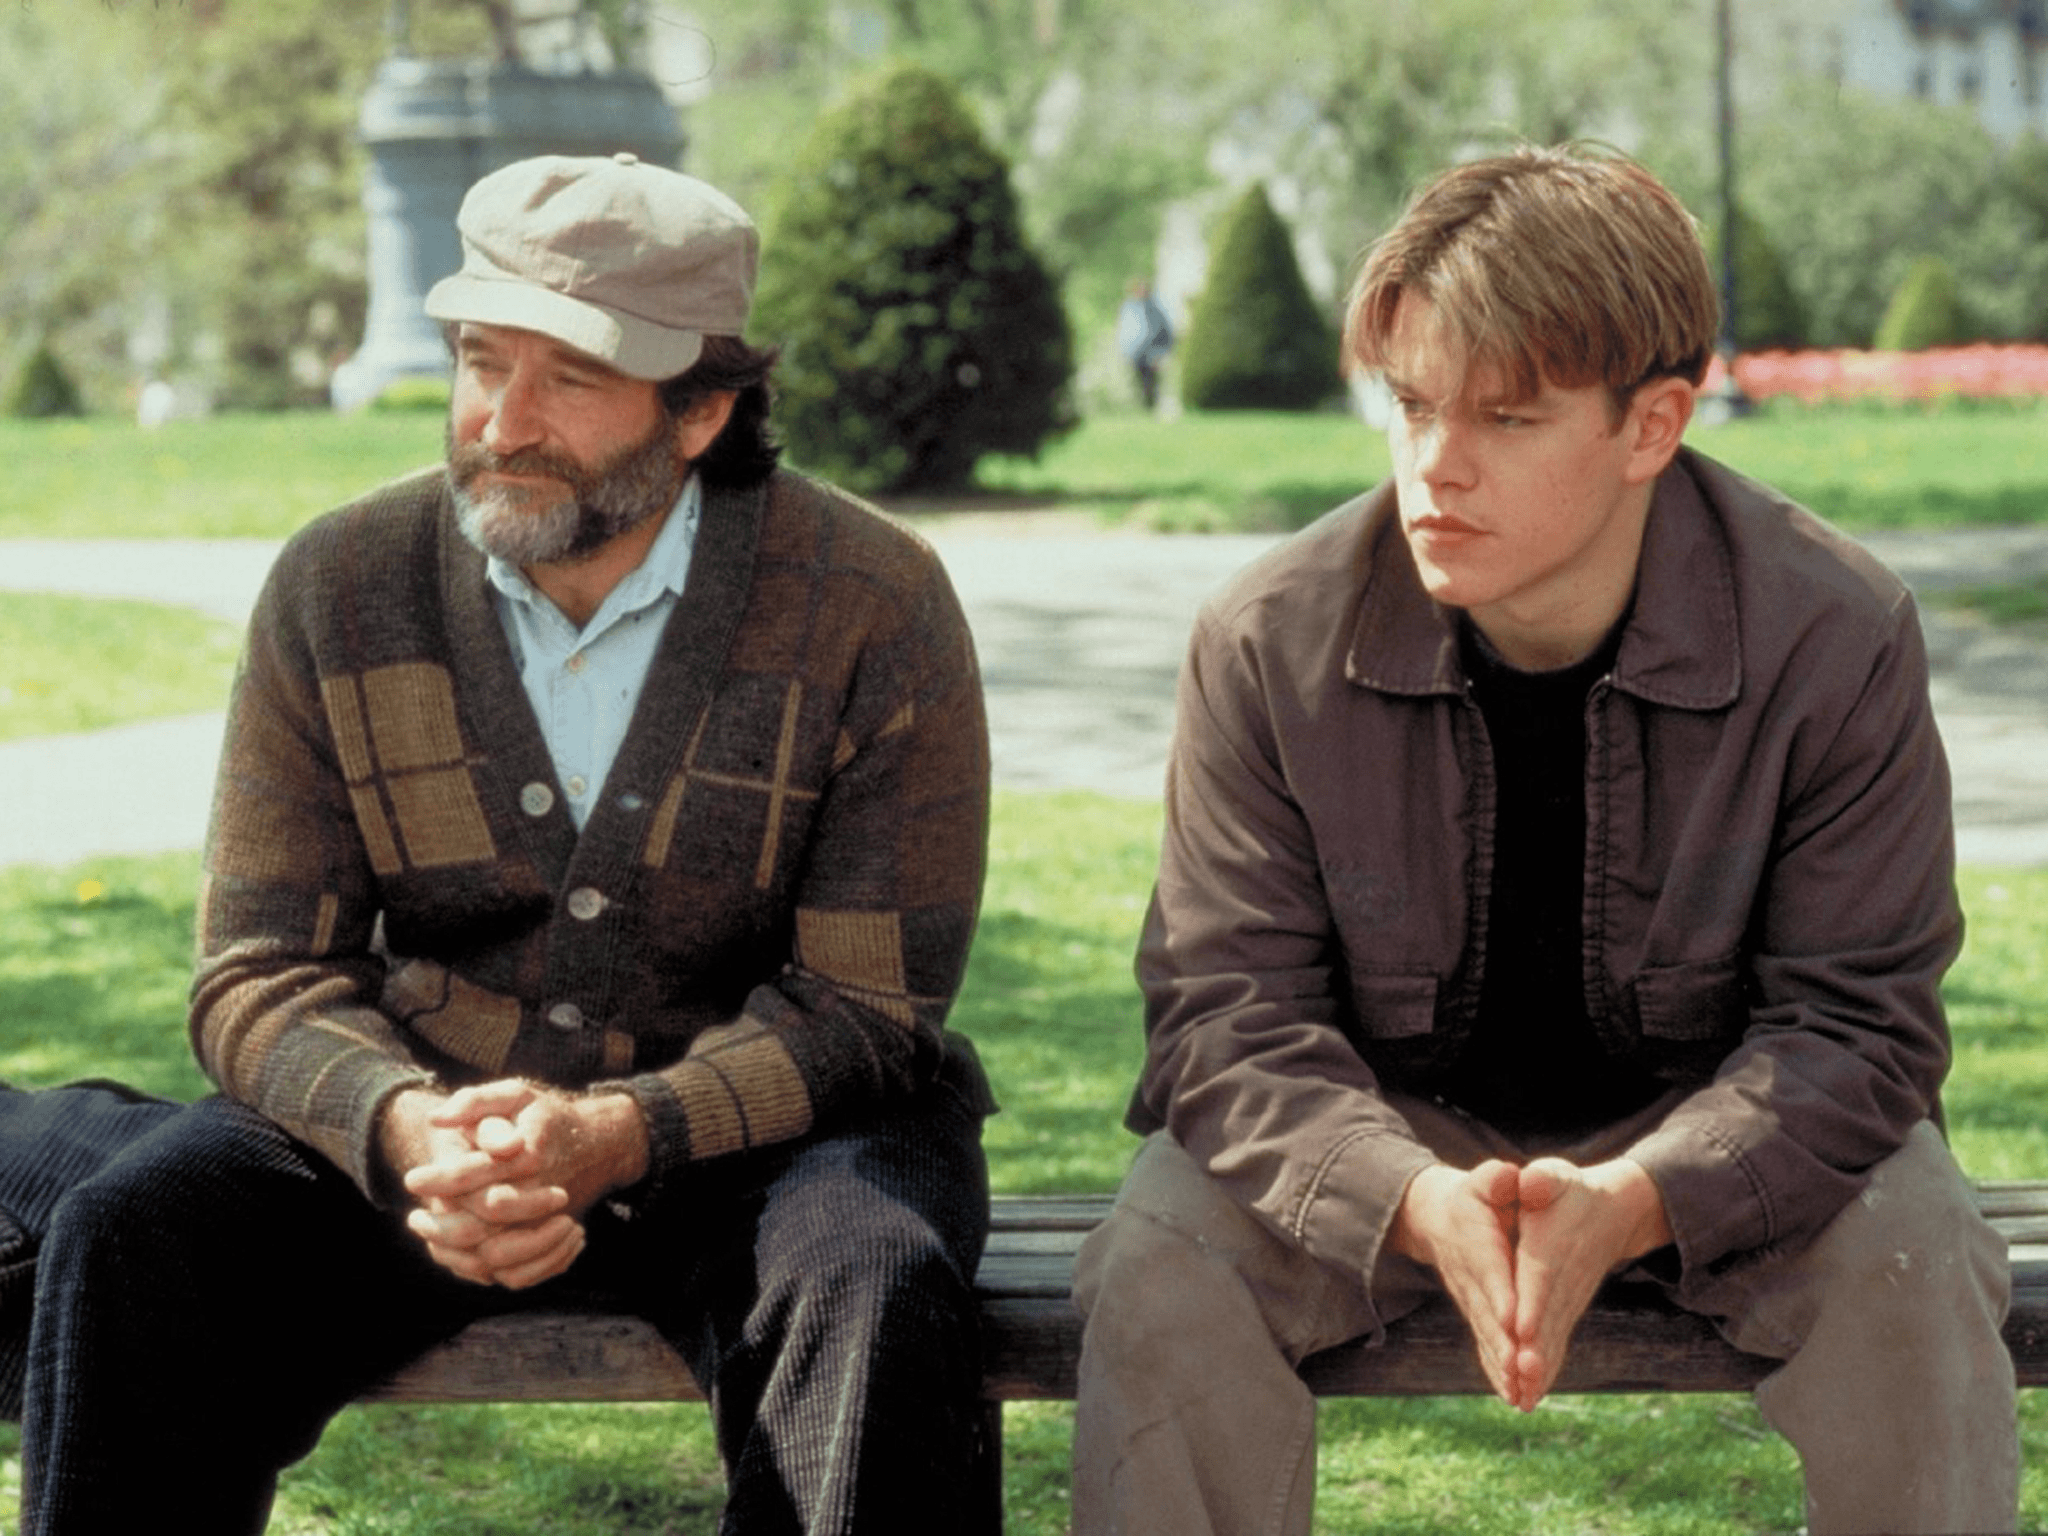 Matt Damon remembers his incredibly emotional scene with Robin